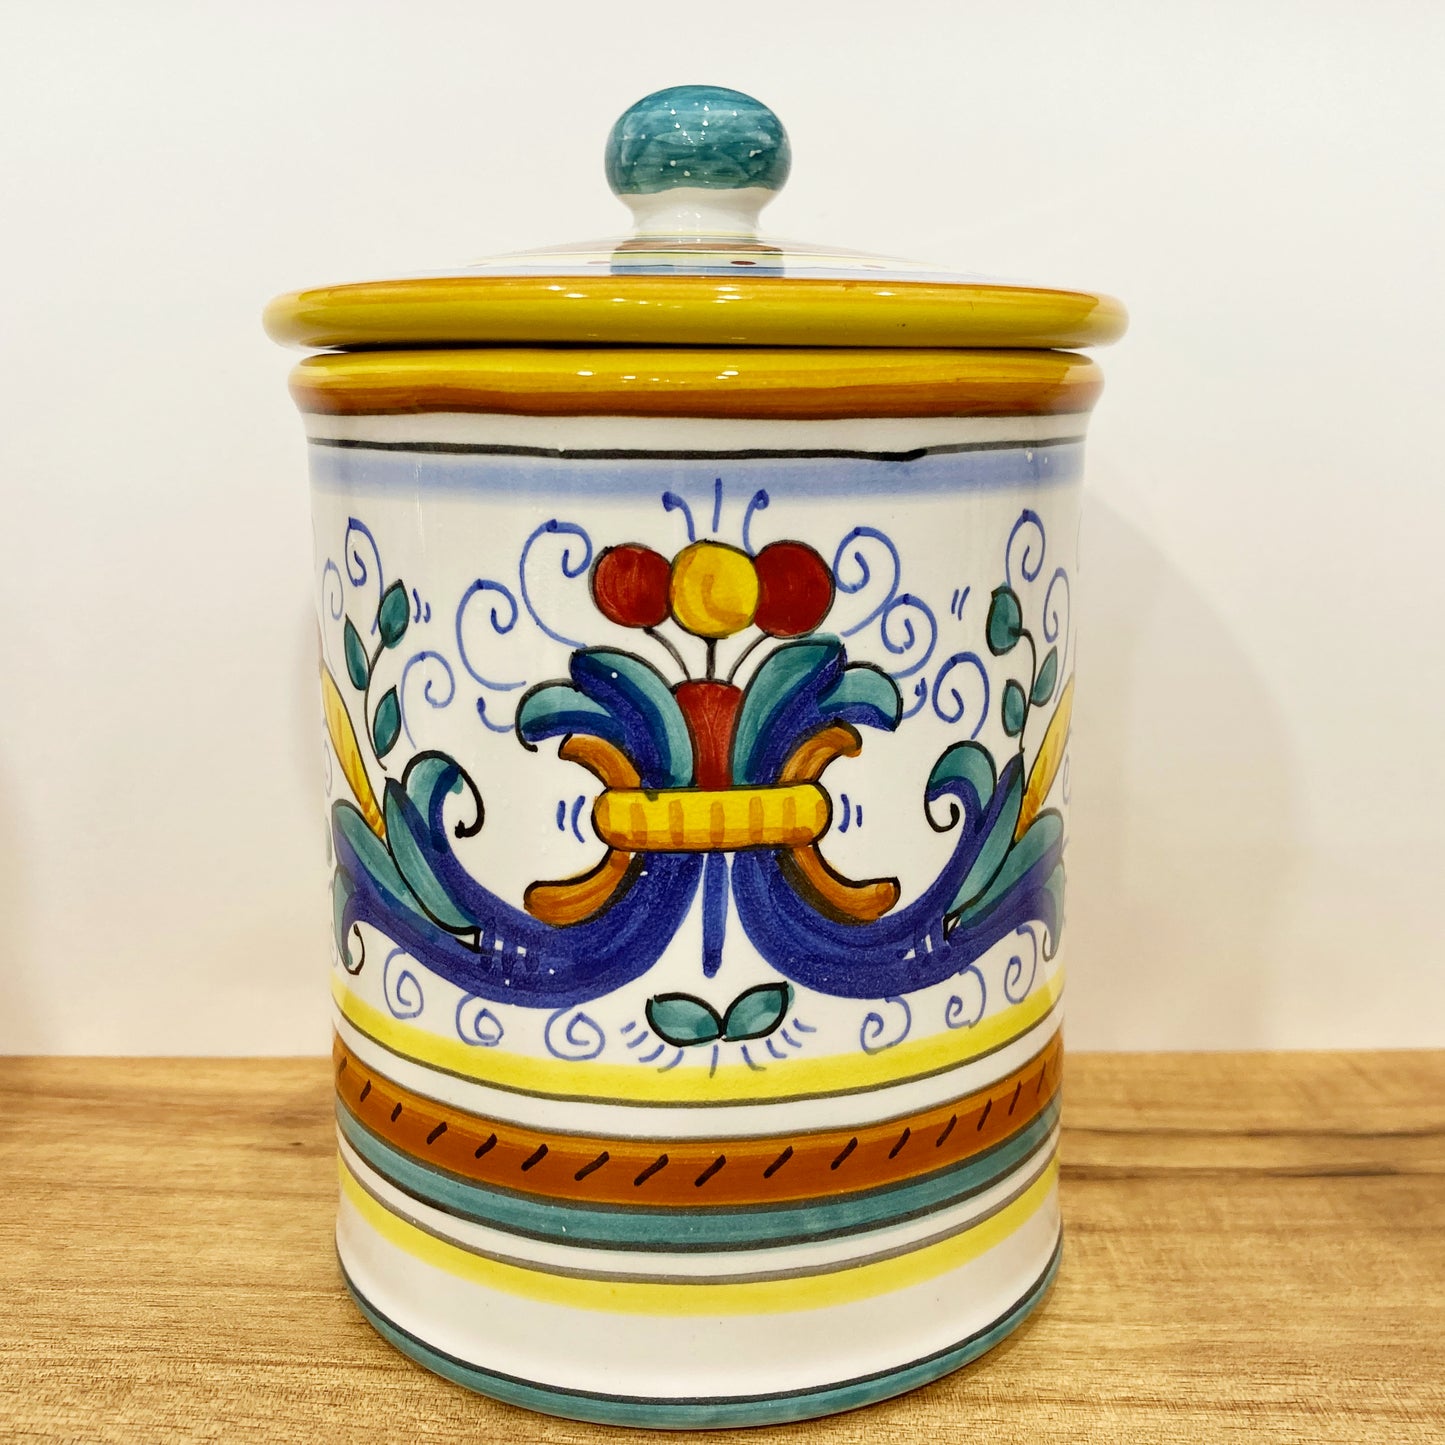 Ricco Deruta Majolica Italian Ceramic Jar Canister